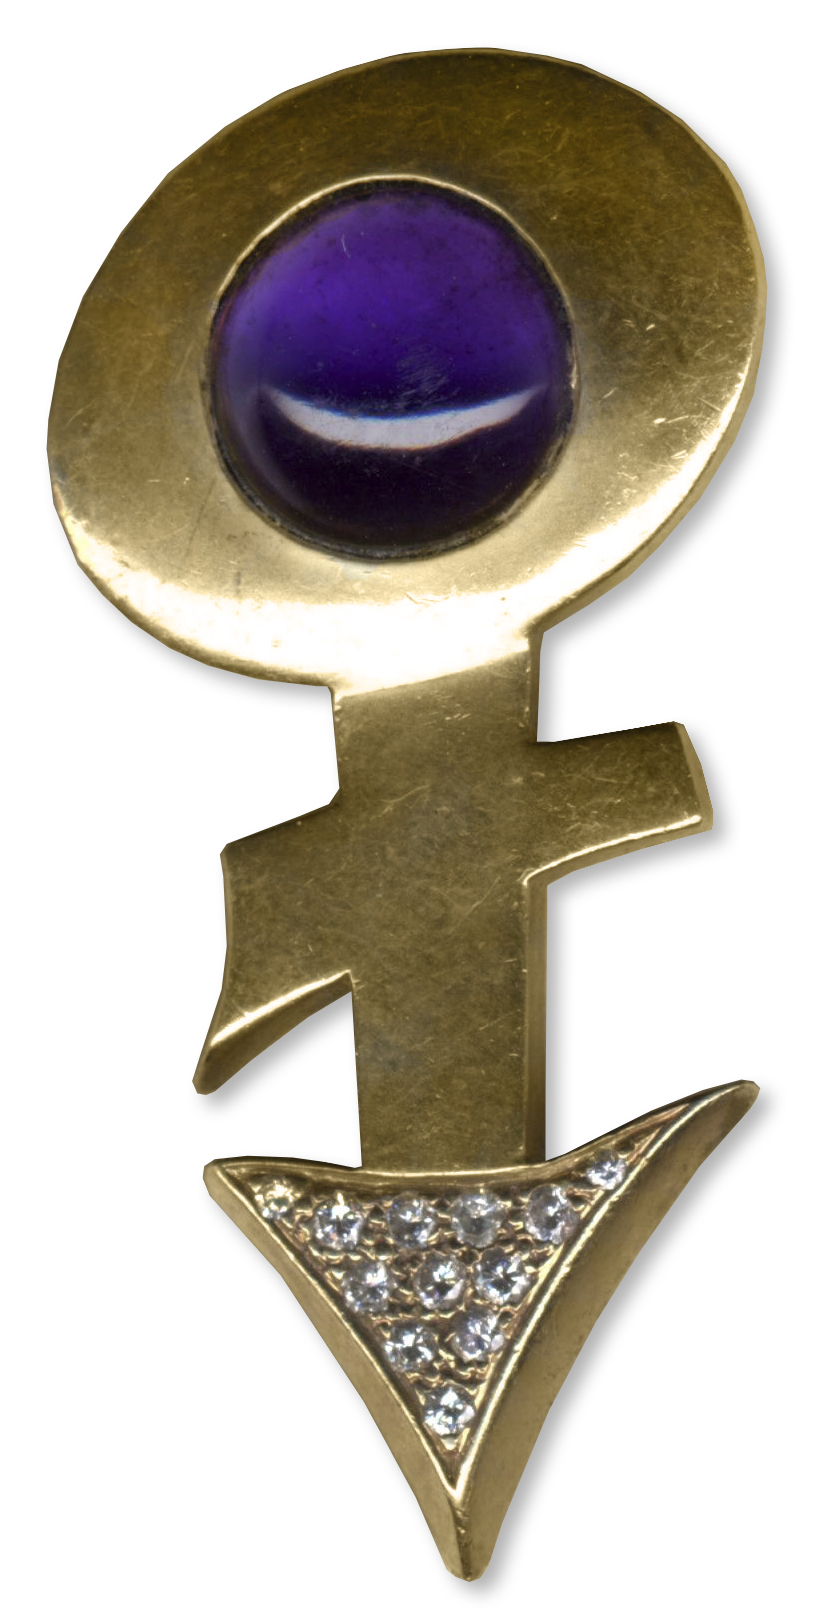 Prince Worn Jewelry Prince Worn Diamond & Amethyst Pin -- In the Shape of His Love Symbol